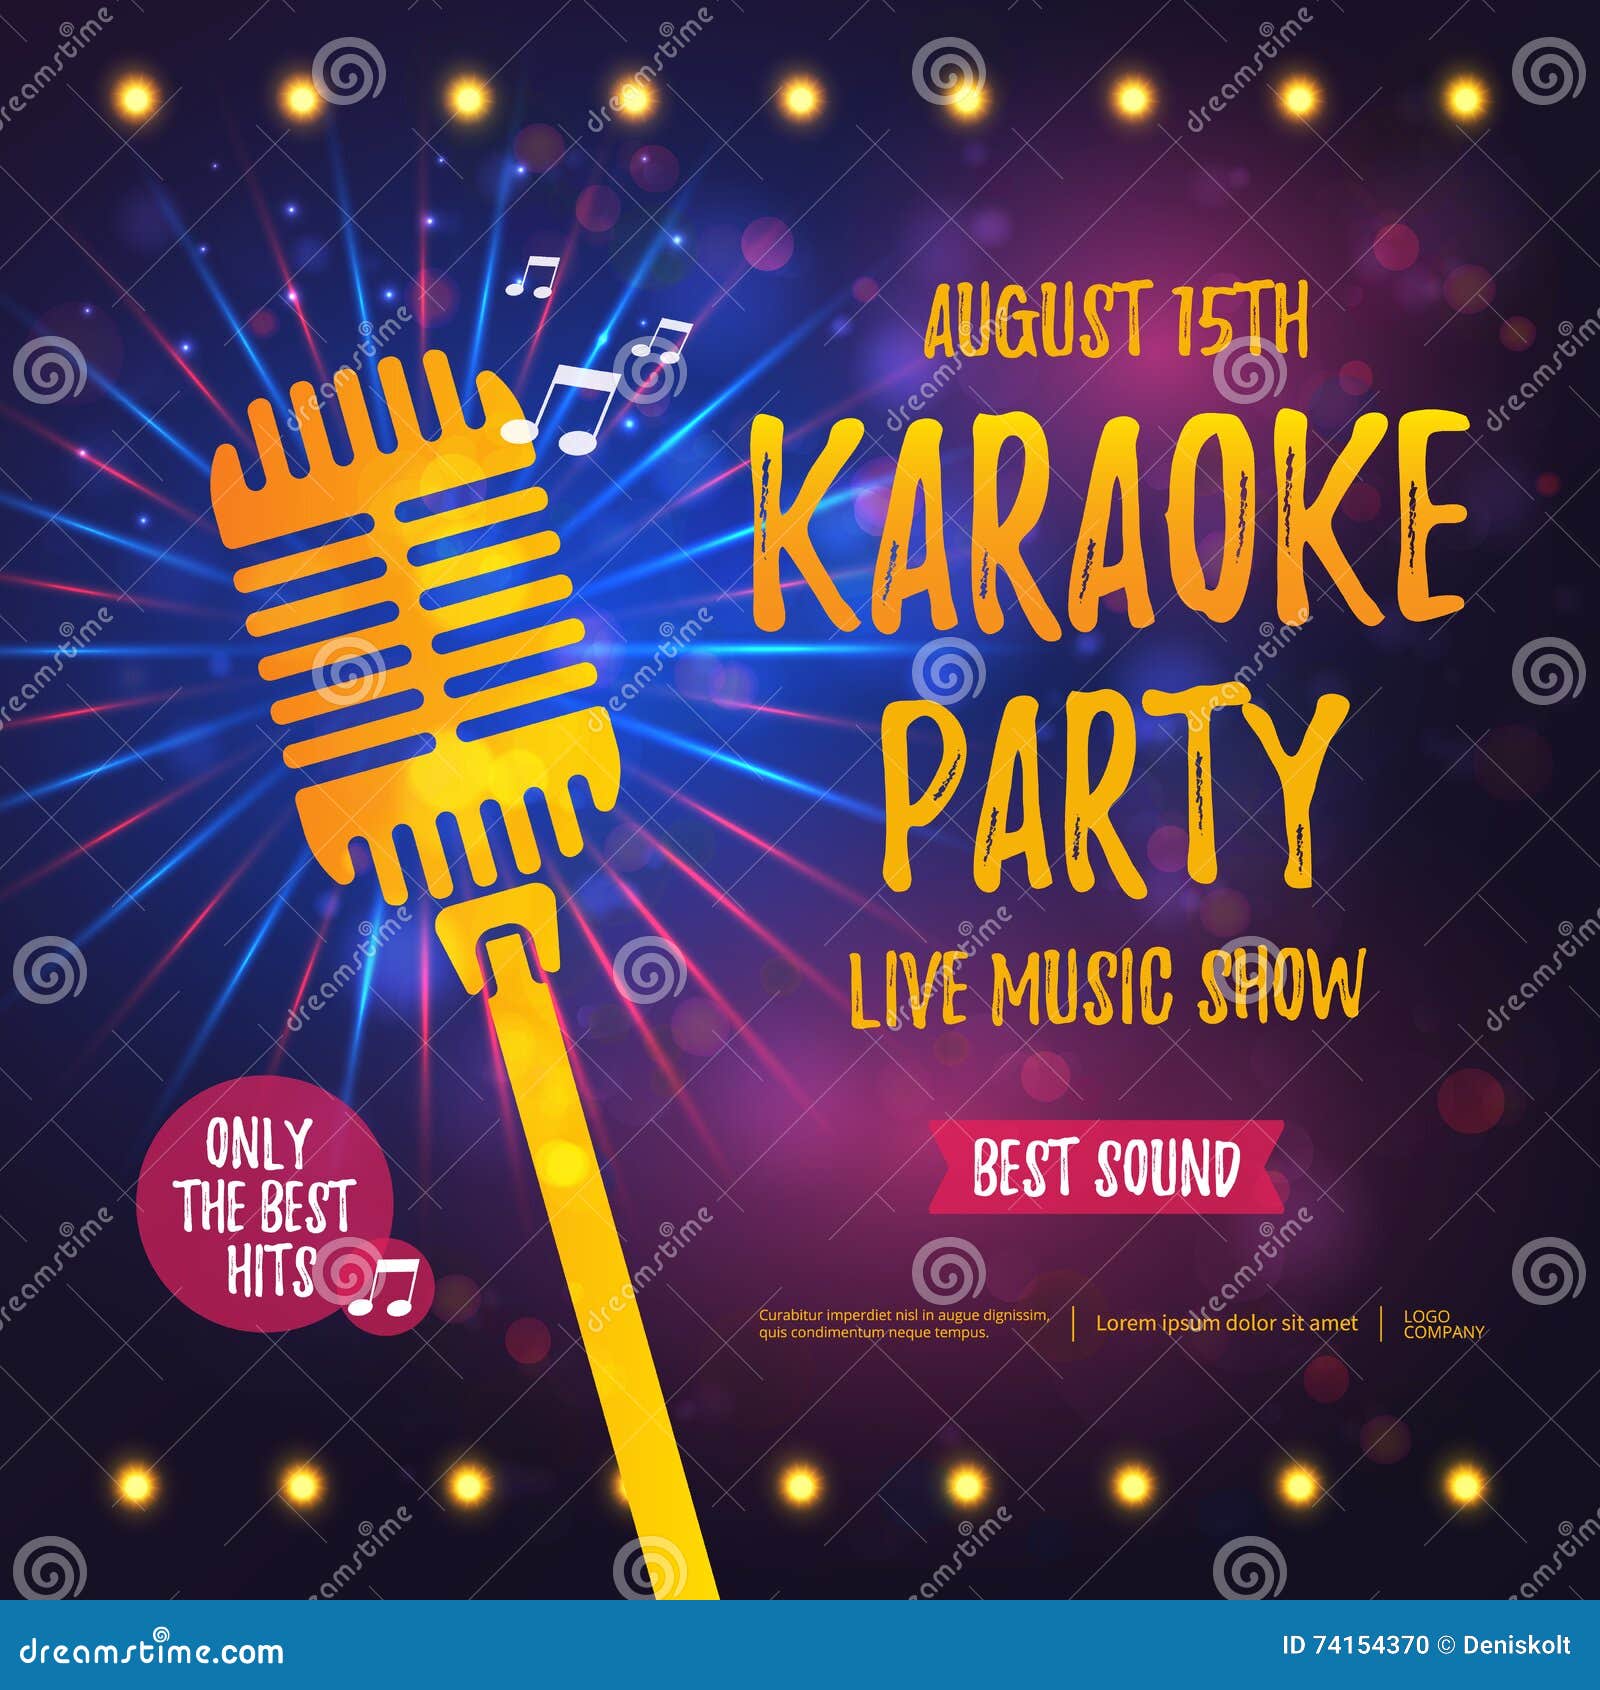 karaoke party banner